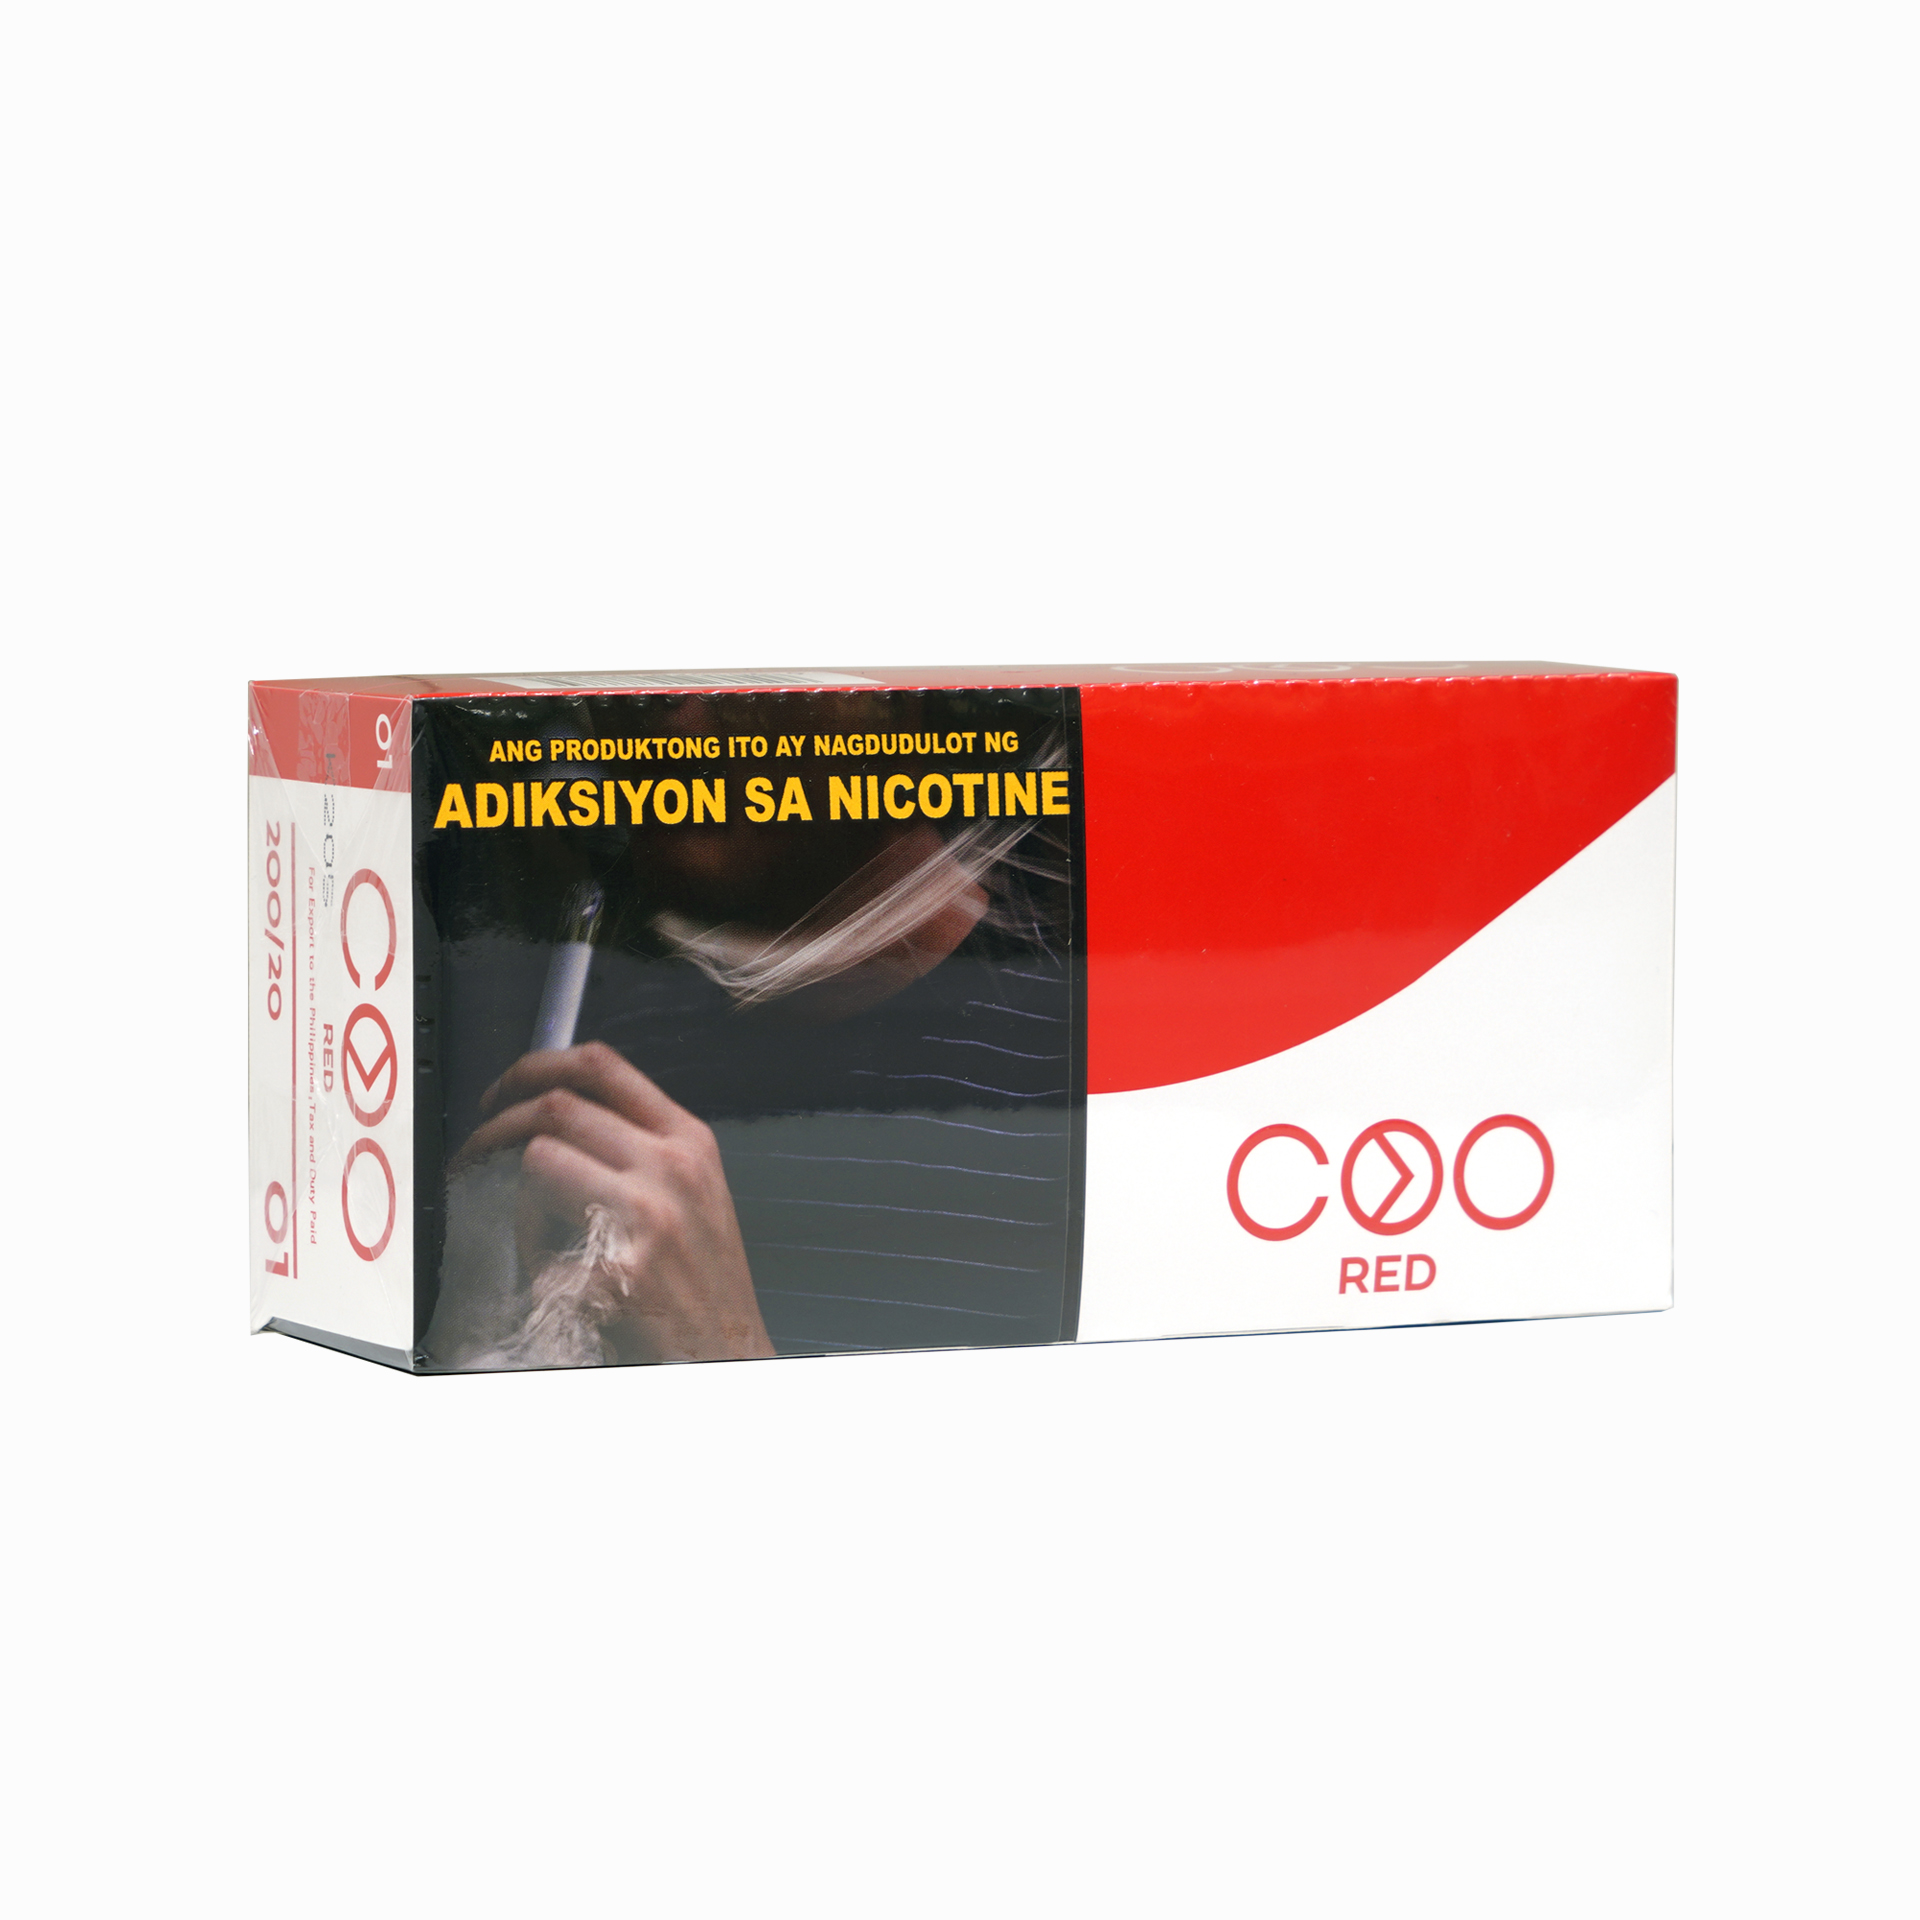 MOK COO Red Heat-Not-Burn Sticks (1 ream, 10 packs)